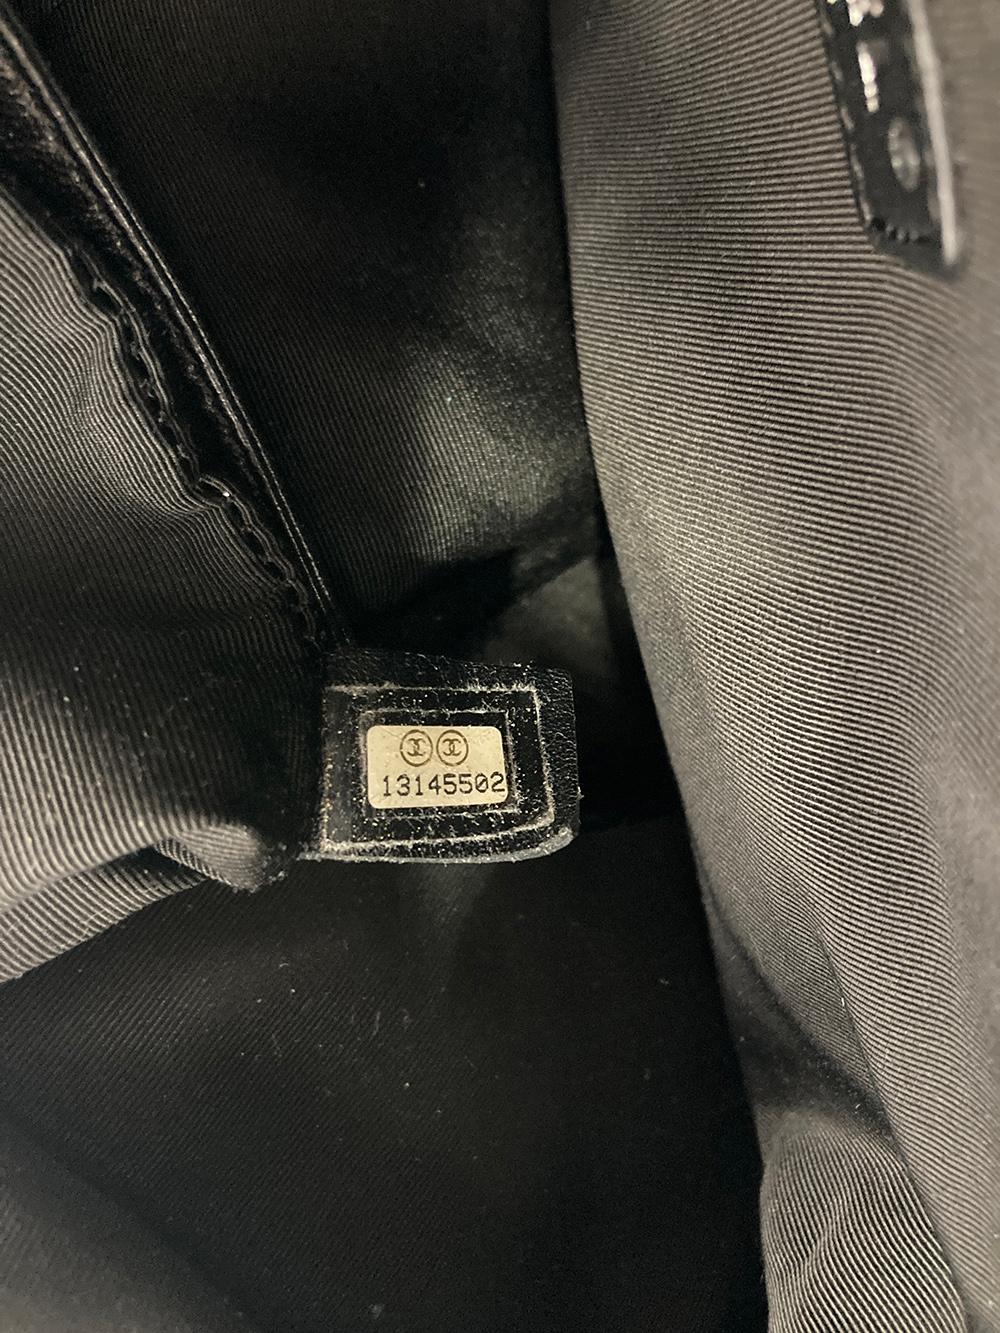 Chanel White Leather Black Grosgrain Quilted CC Shoulder Bag Tote 8